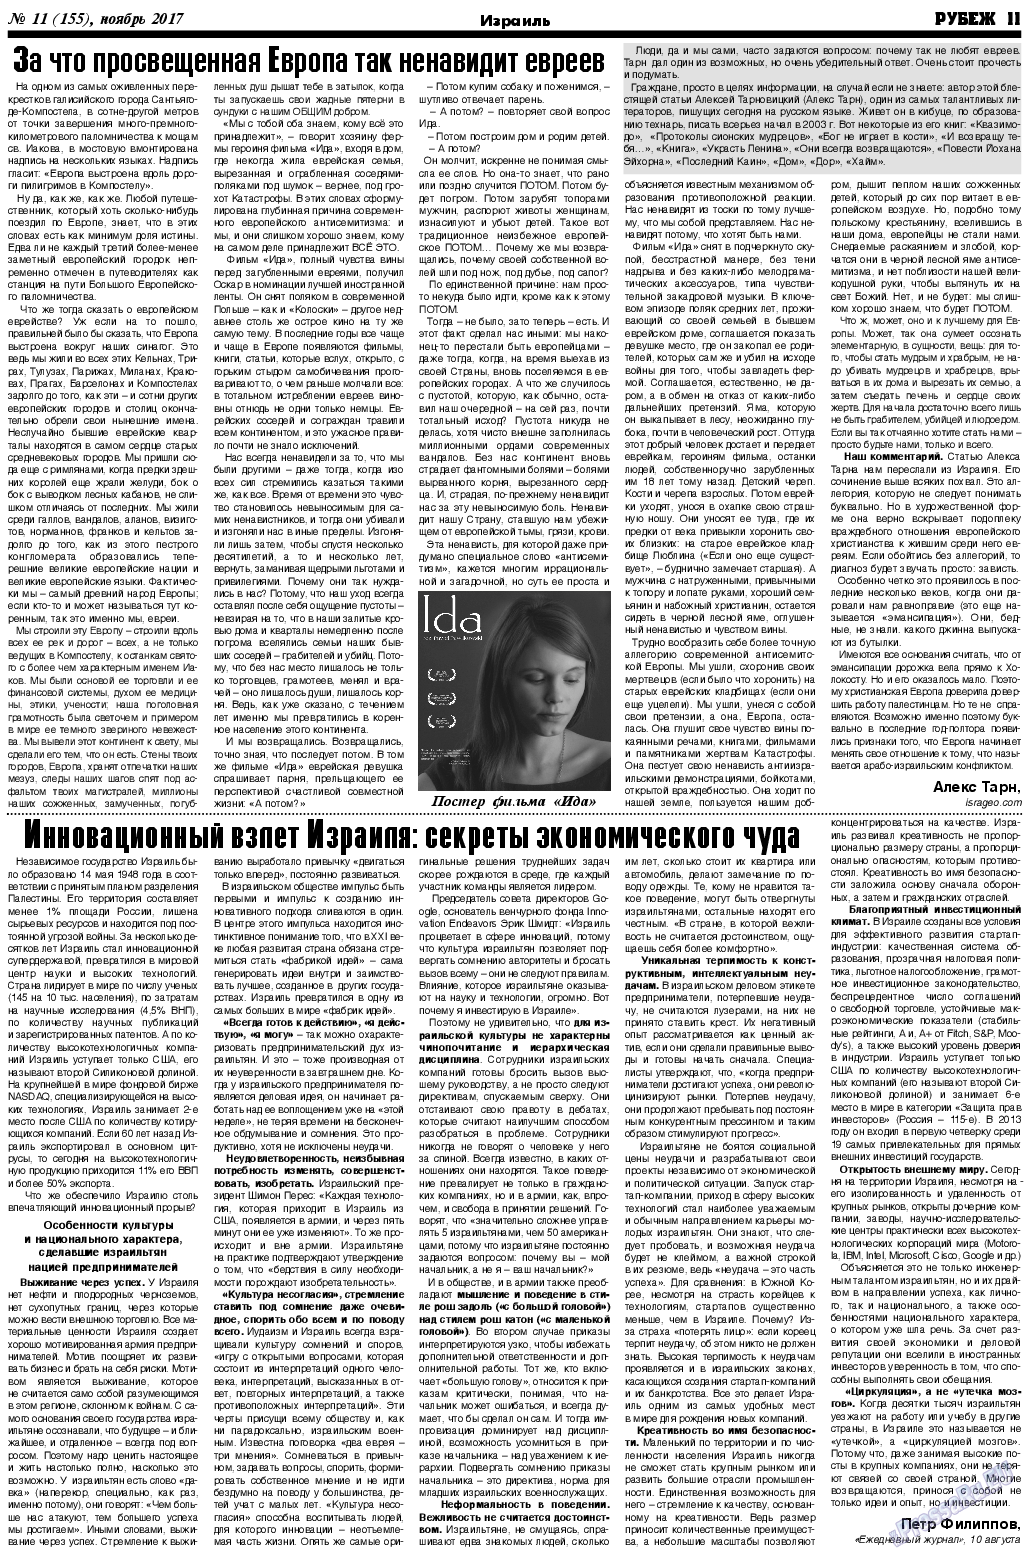 Рубеж, газета. 2017 №11 стр.11